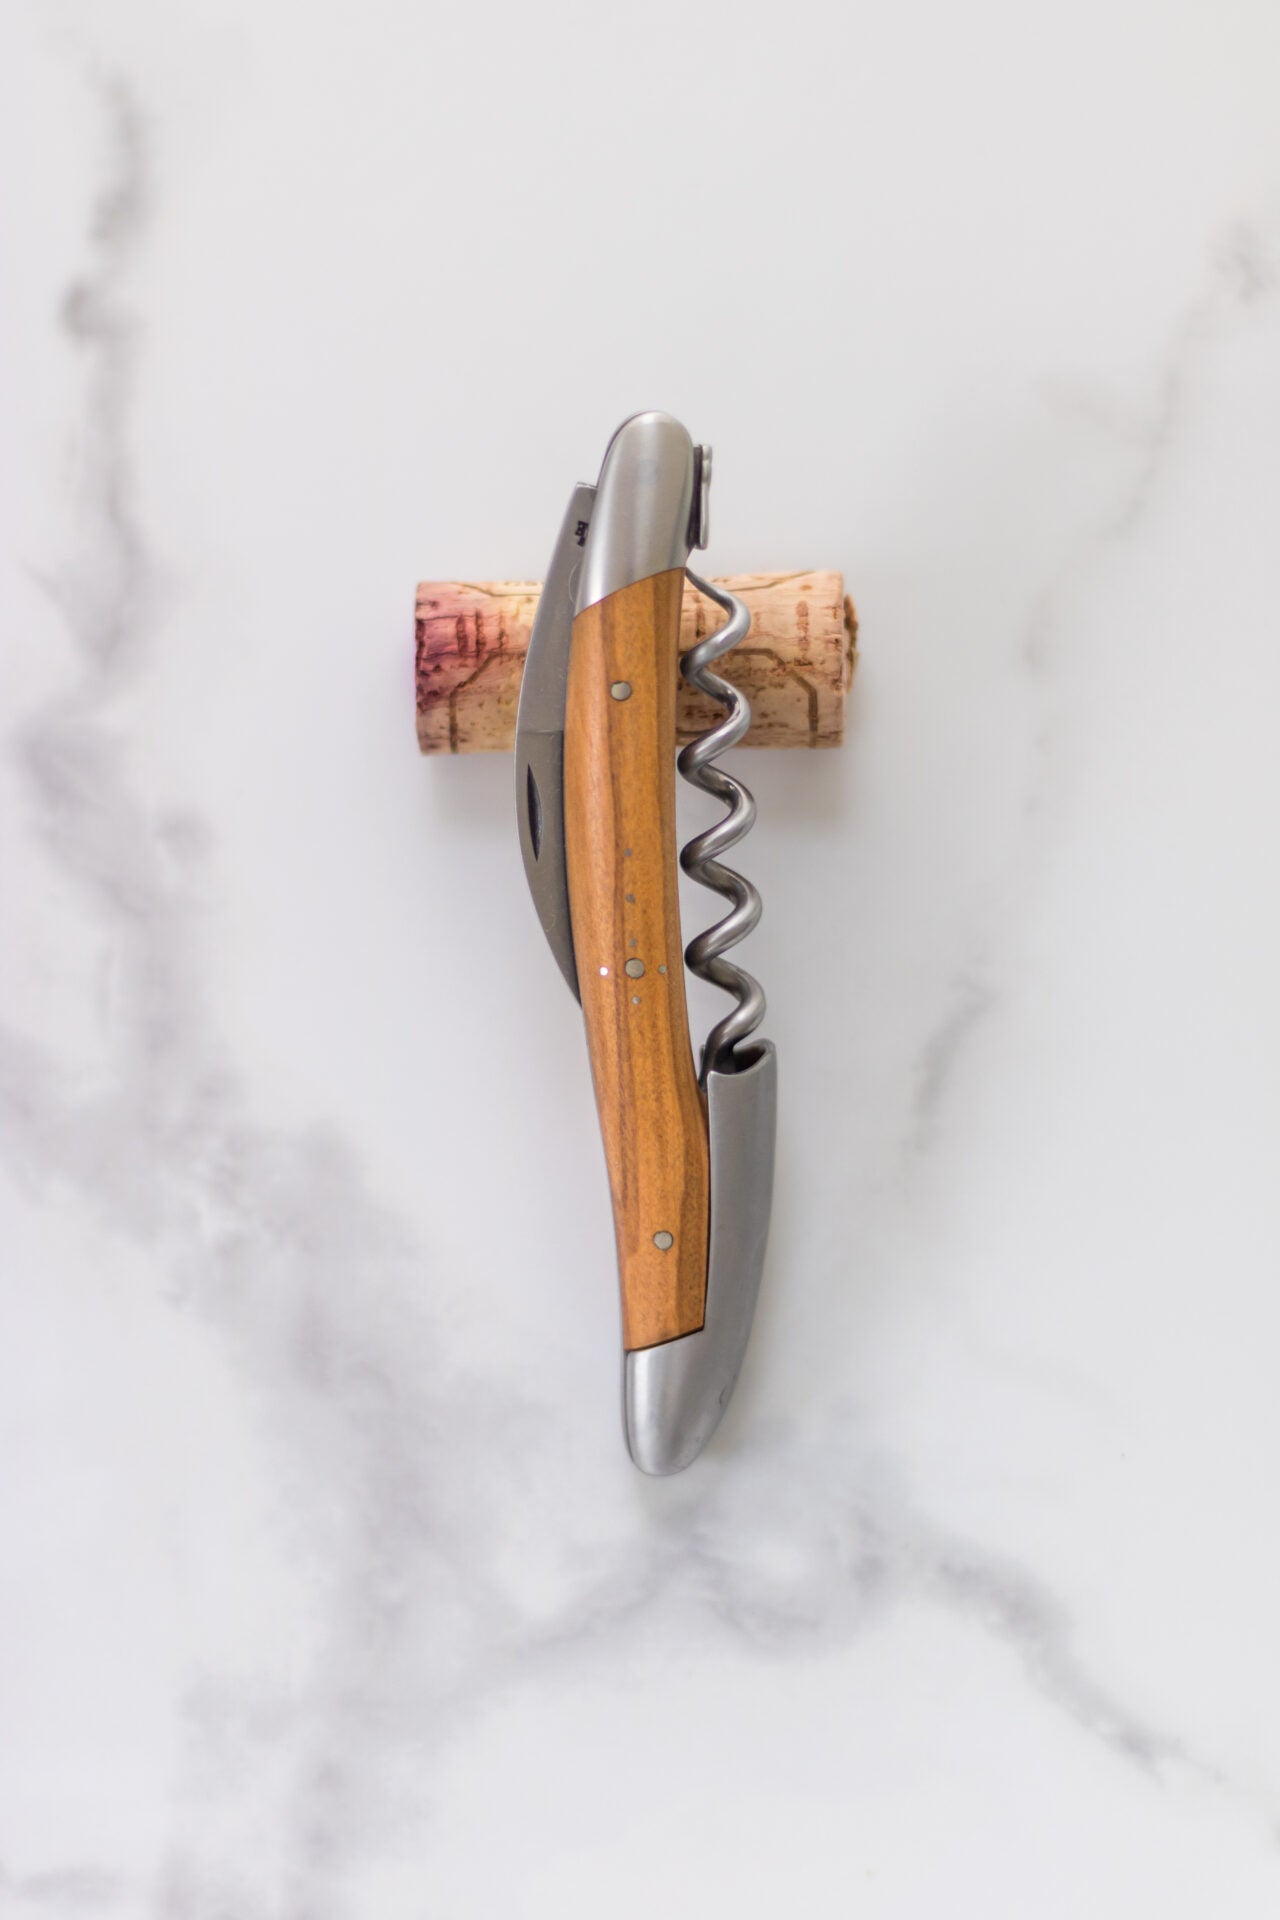 Laguiole Sommelier Messer satiniert mit Griff aus Olivenholz